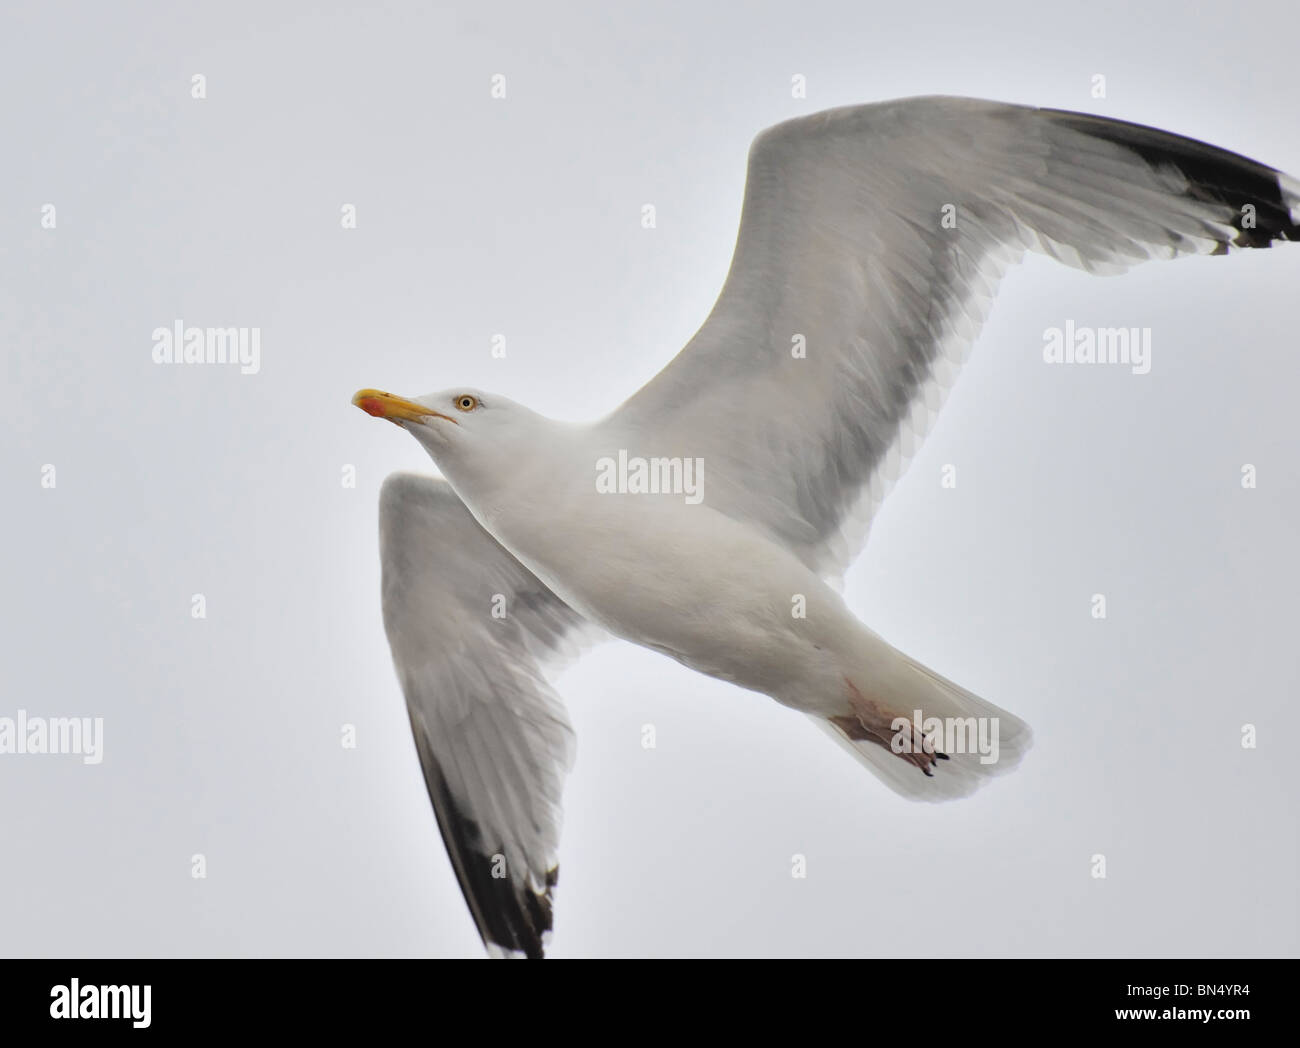 Adult Lesser Black-backed gull (Larus fuscus) soaring in sky Stock Photo